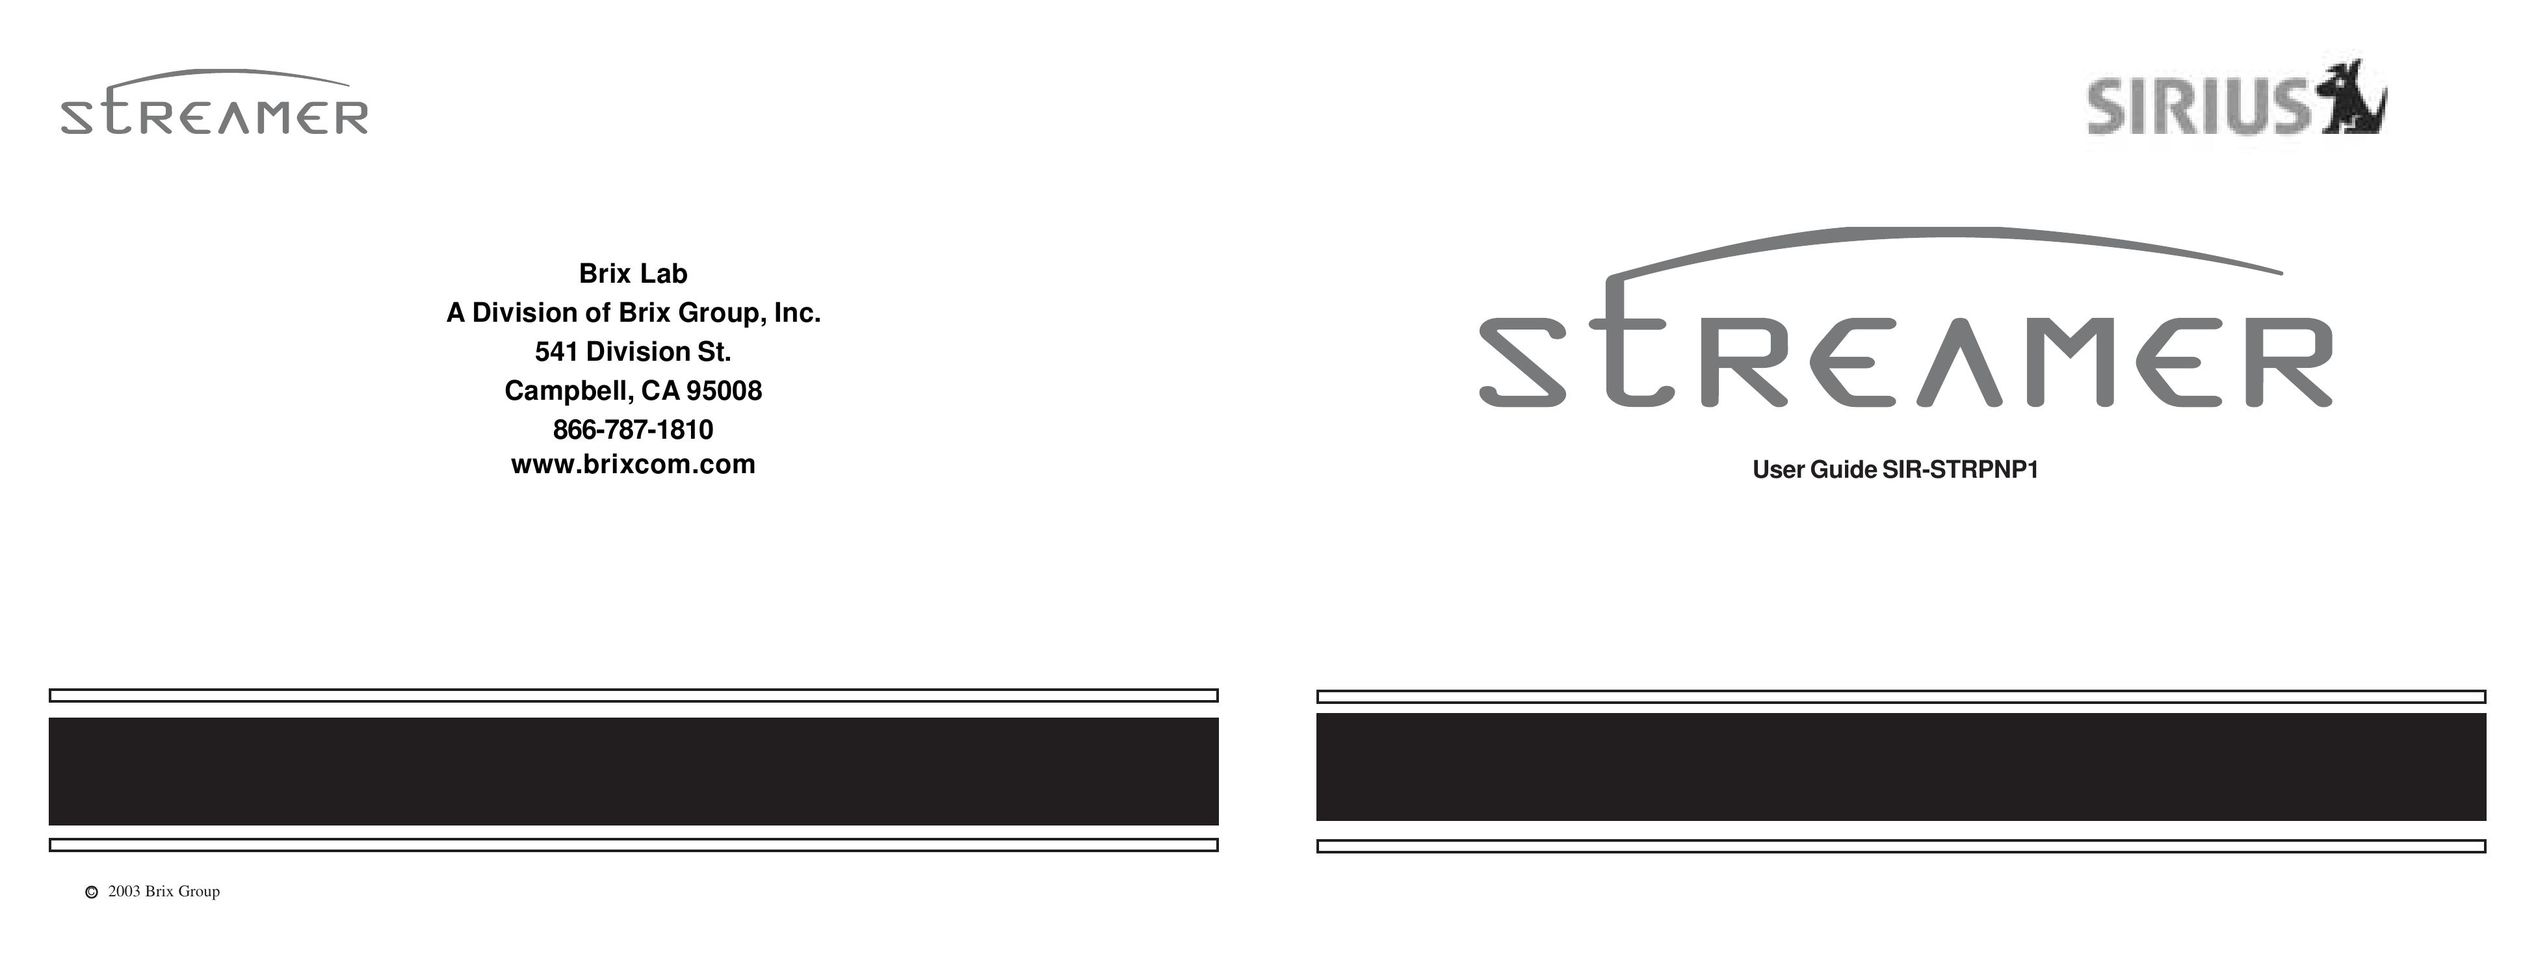 Sirius Satellite Radio SIR-STRPNP1 Car Satellite Radio System User Manual